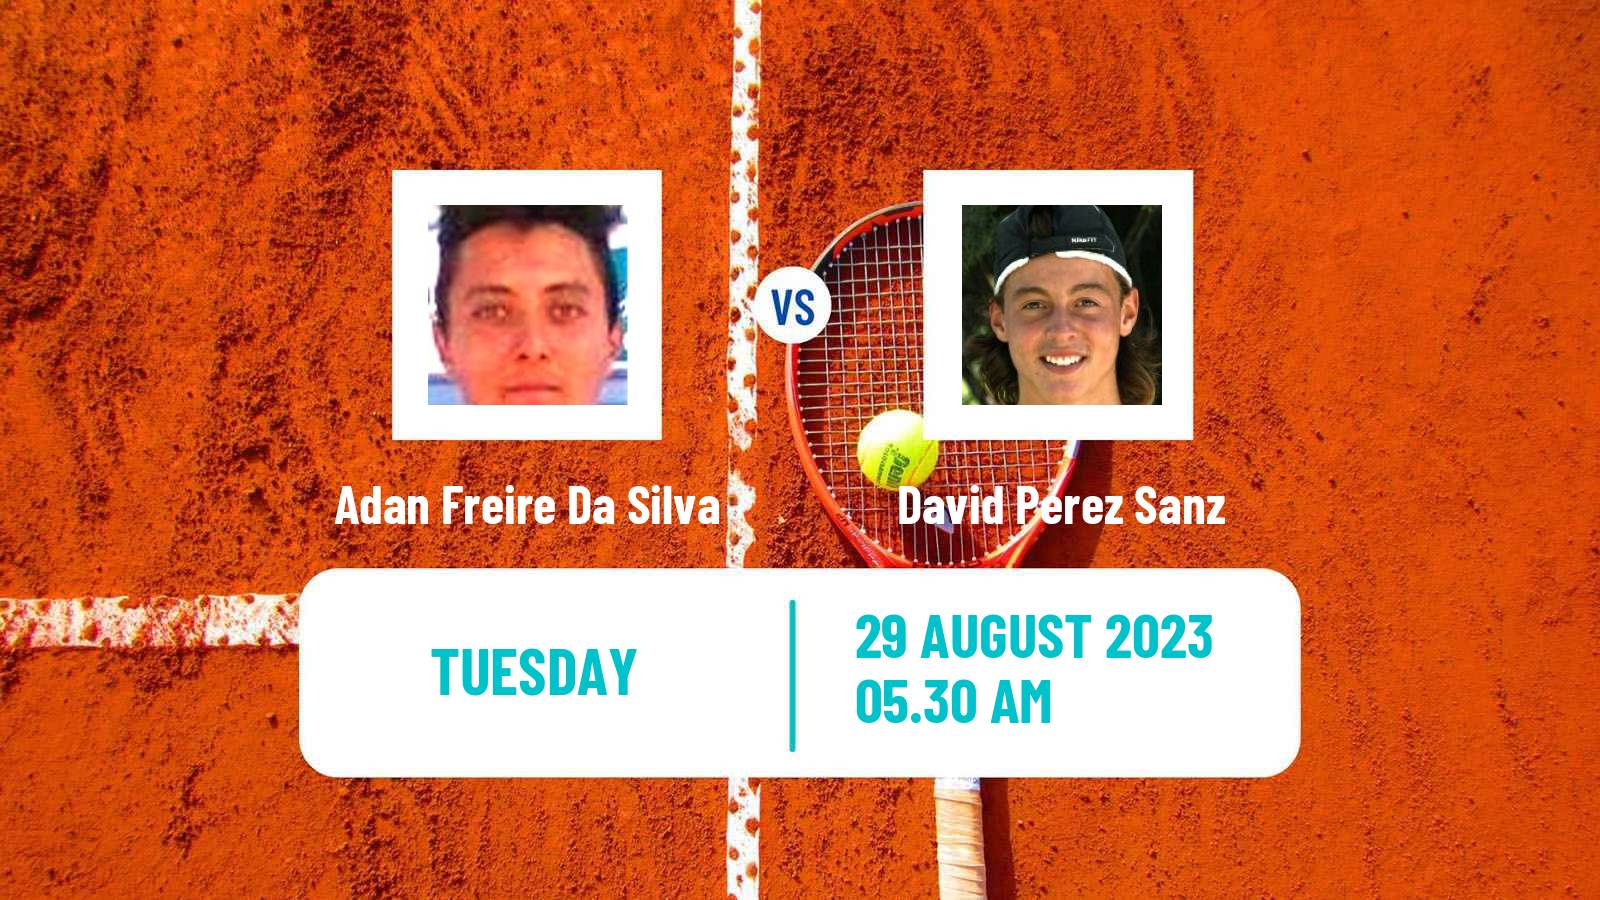 Tennis ITF M25 Idanha A Nova 2 Men Adan Freire Da Silva - David Perez Sanz